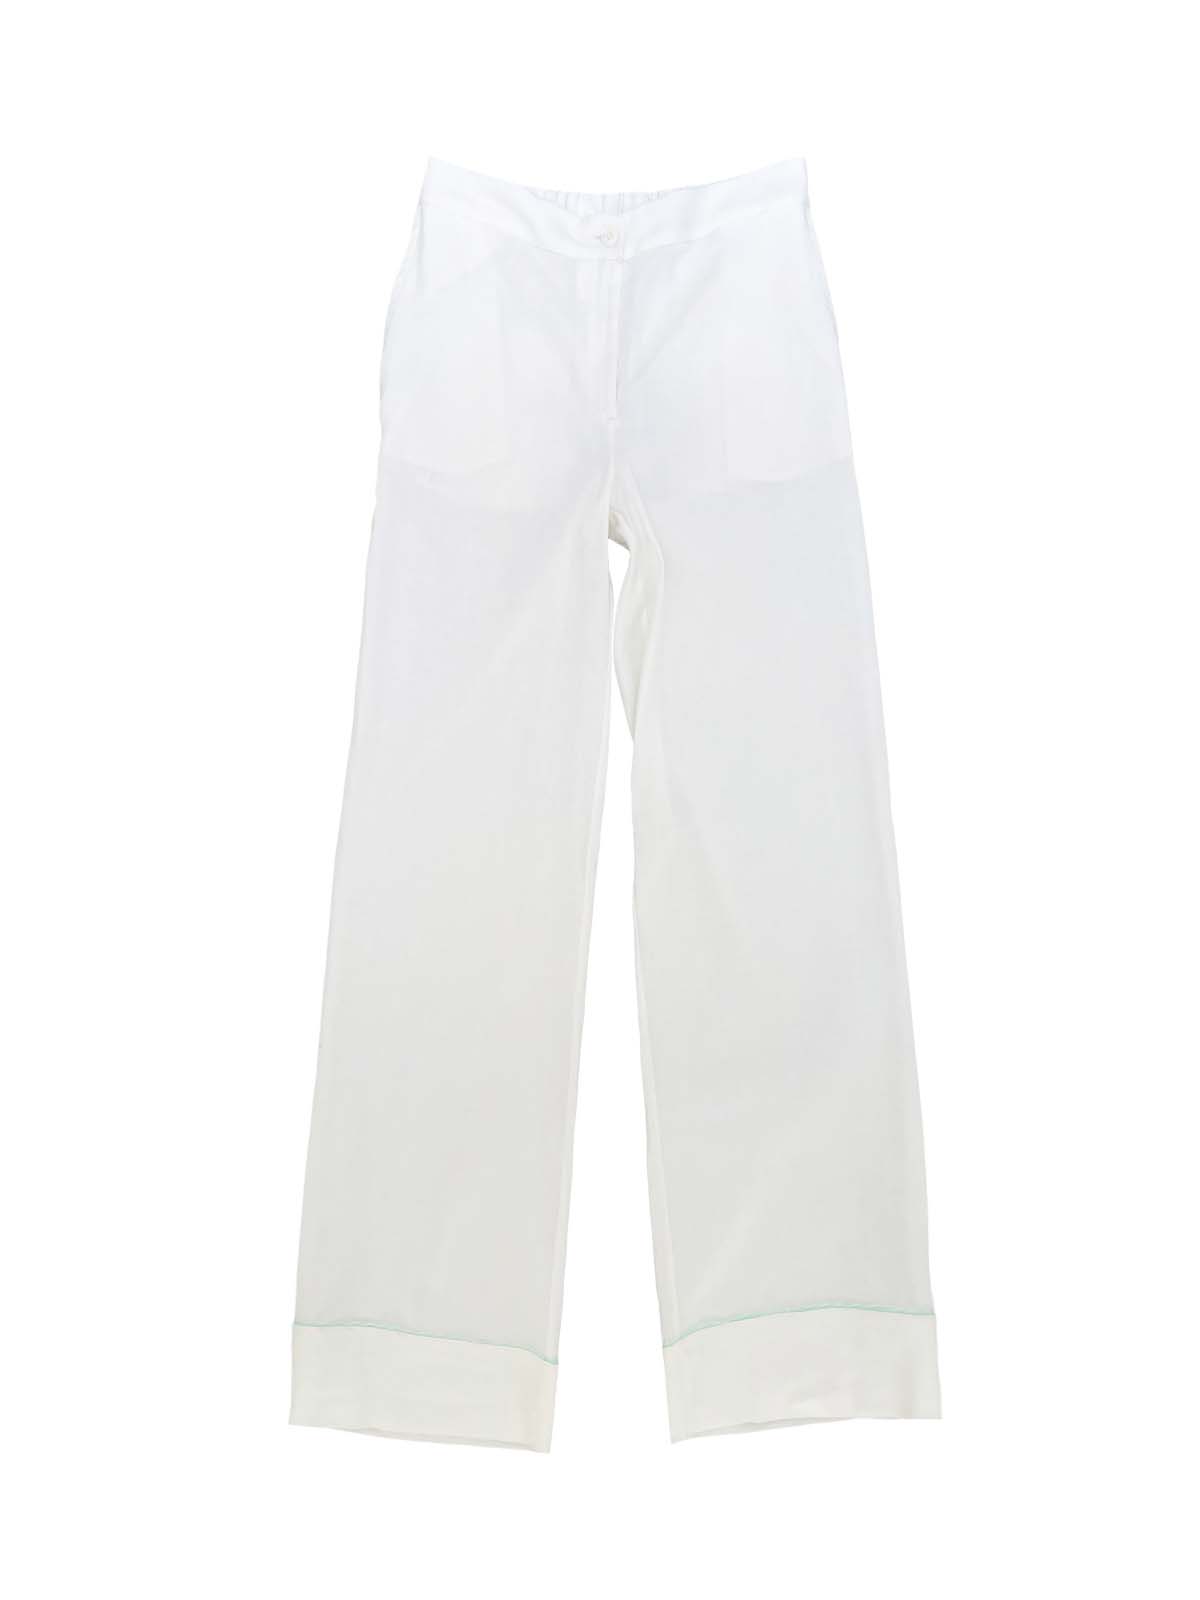 Siesta Pants - White